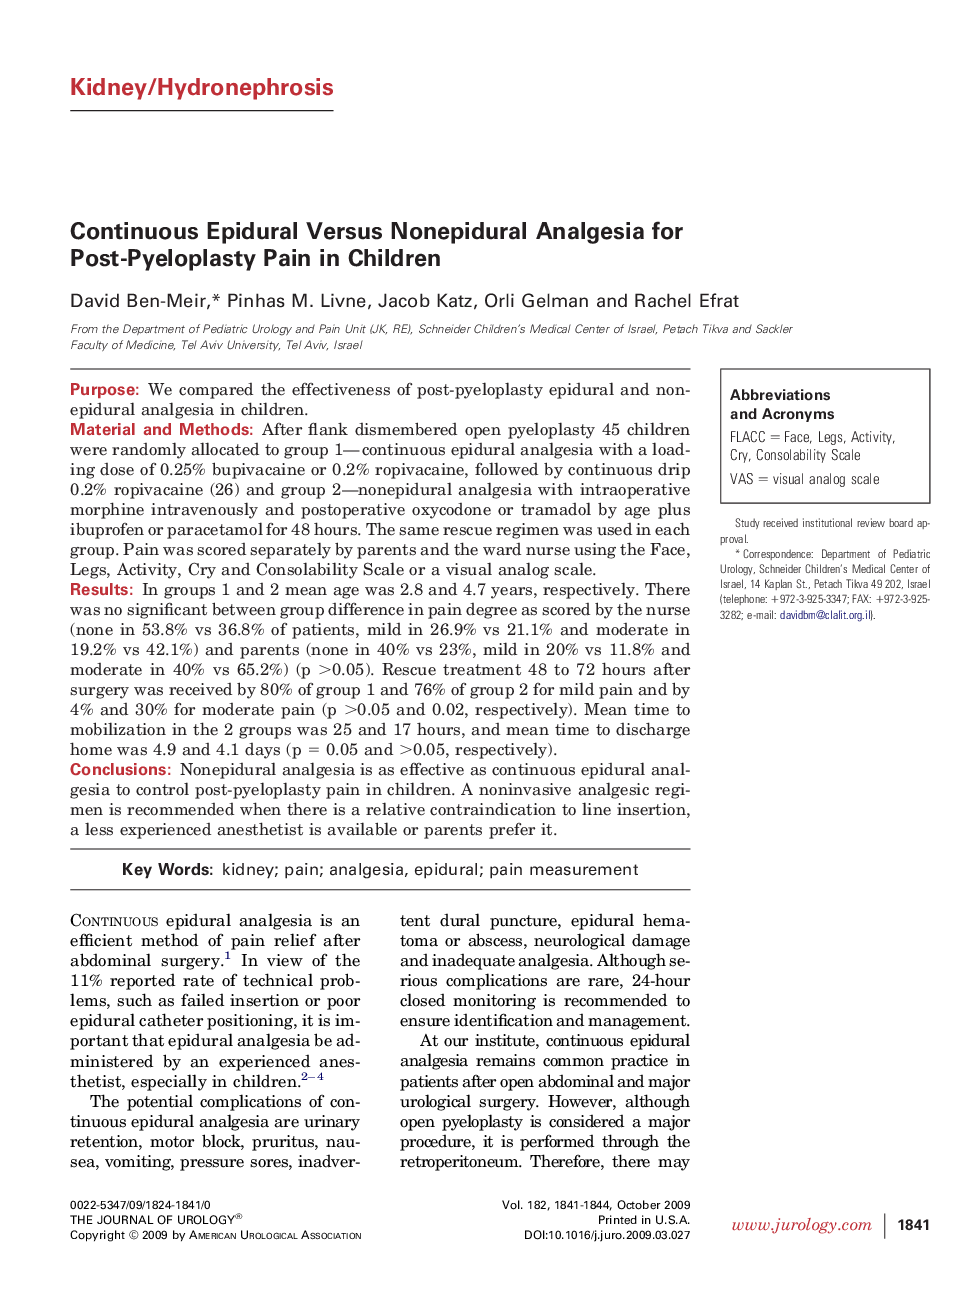 Continuous Epidural Versus Nonepidural Analgesia for Post-Pyeloplasty Pain in Children 